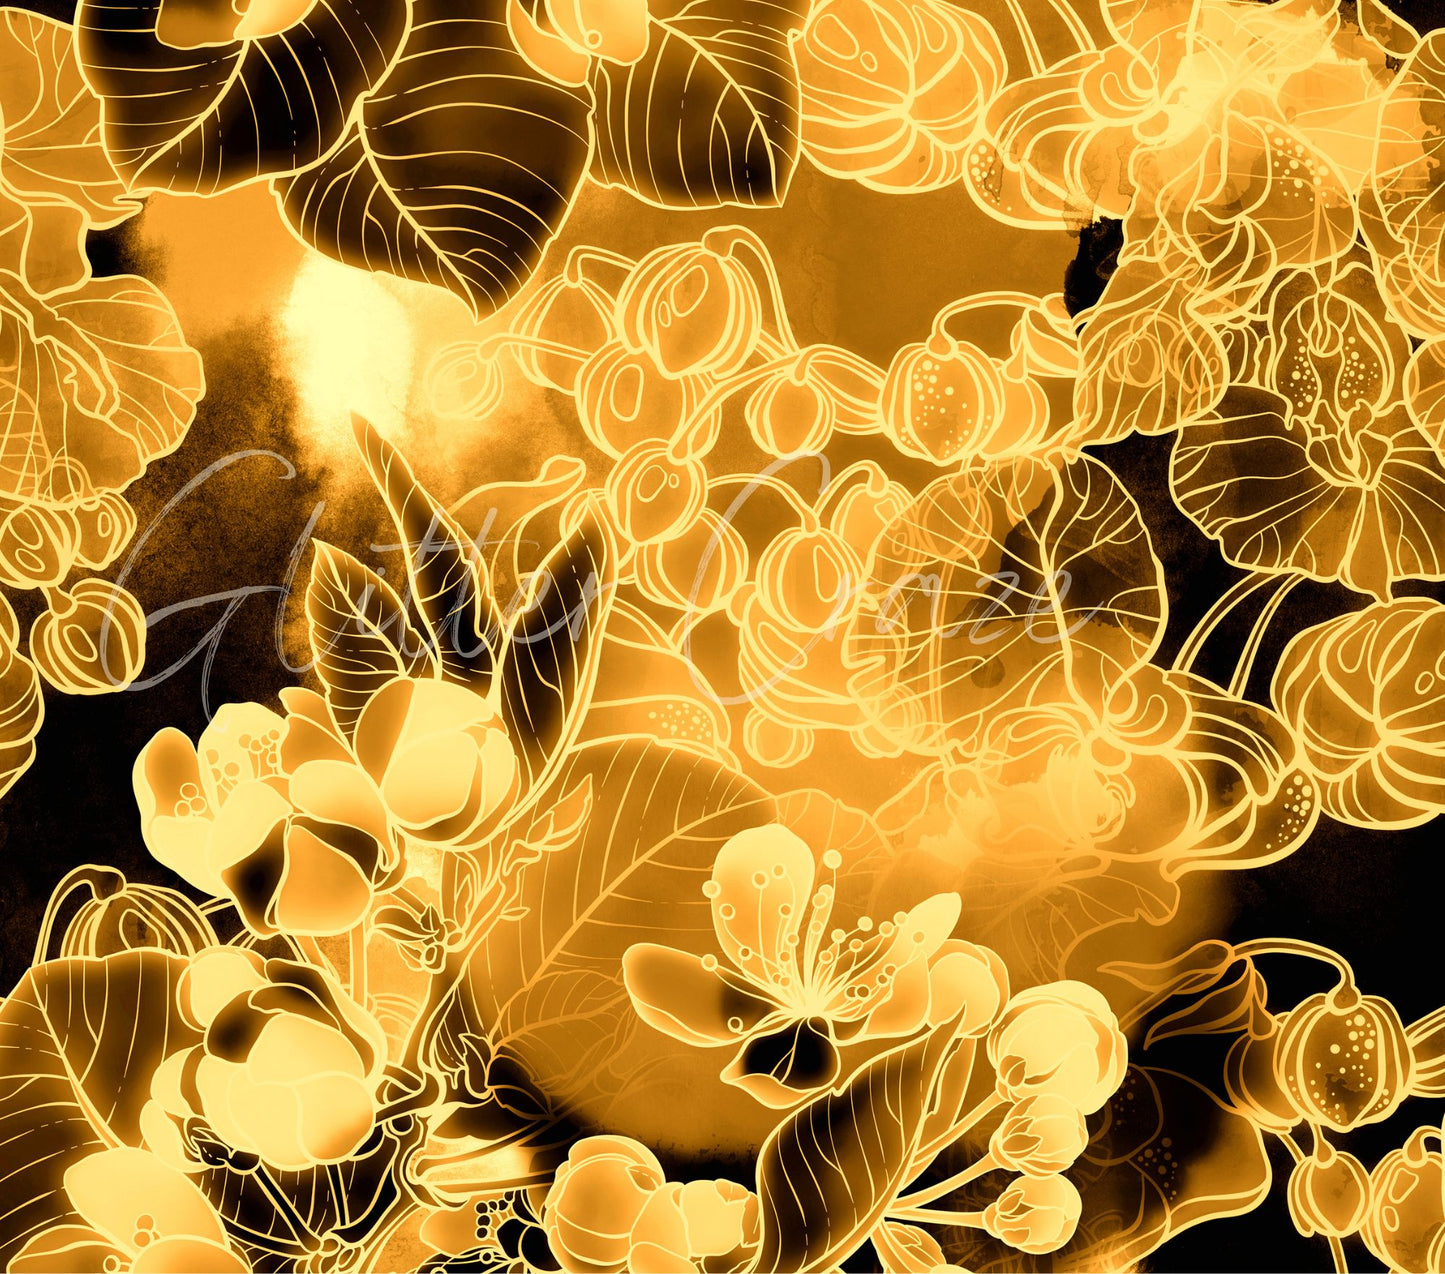 Golden Floral Adhesive Vinyl Wraps 6 Design Options